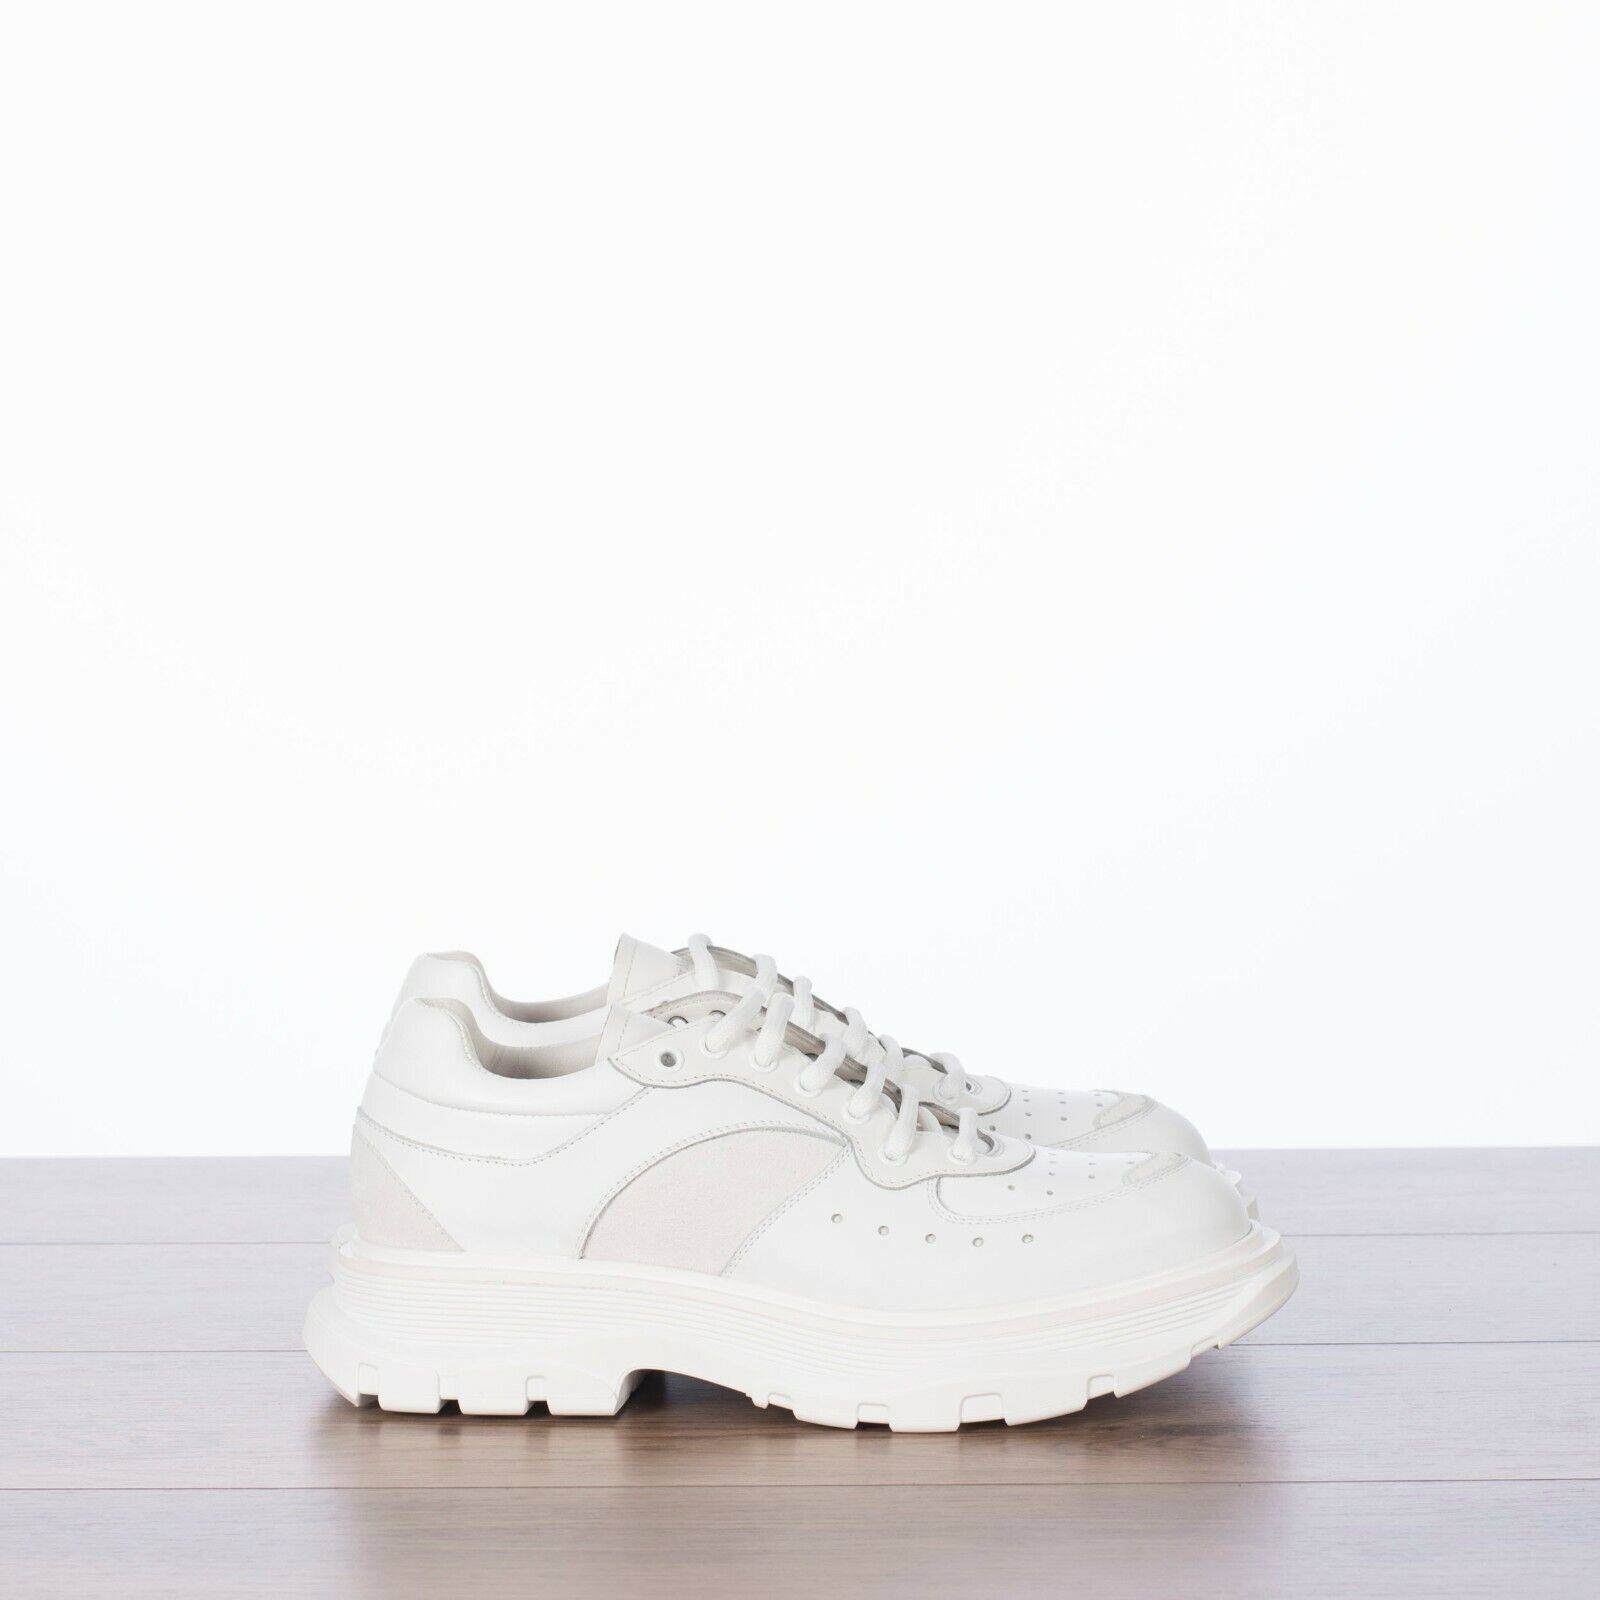 ALEXANDER MCQUEEN 730$ Men's Tread Slick Sneakers In White Leather | eBay